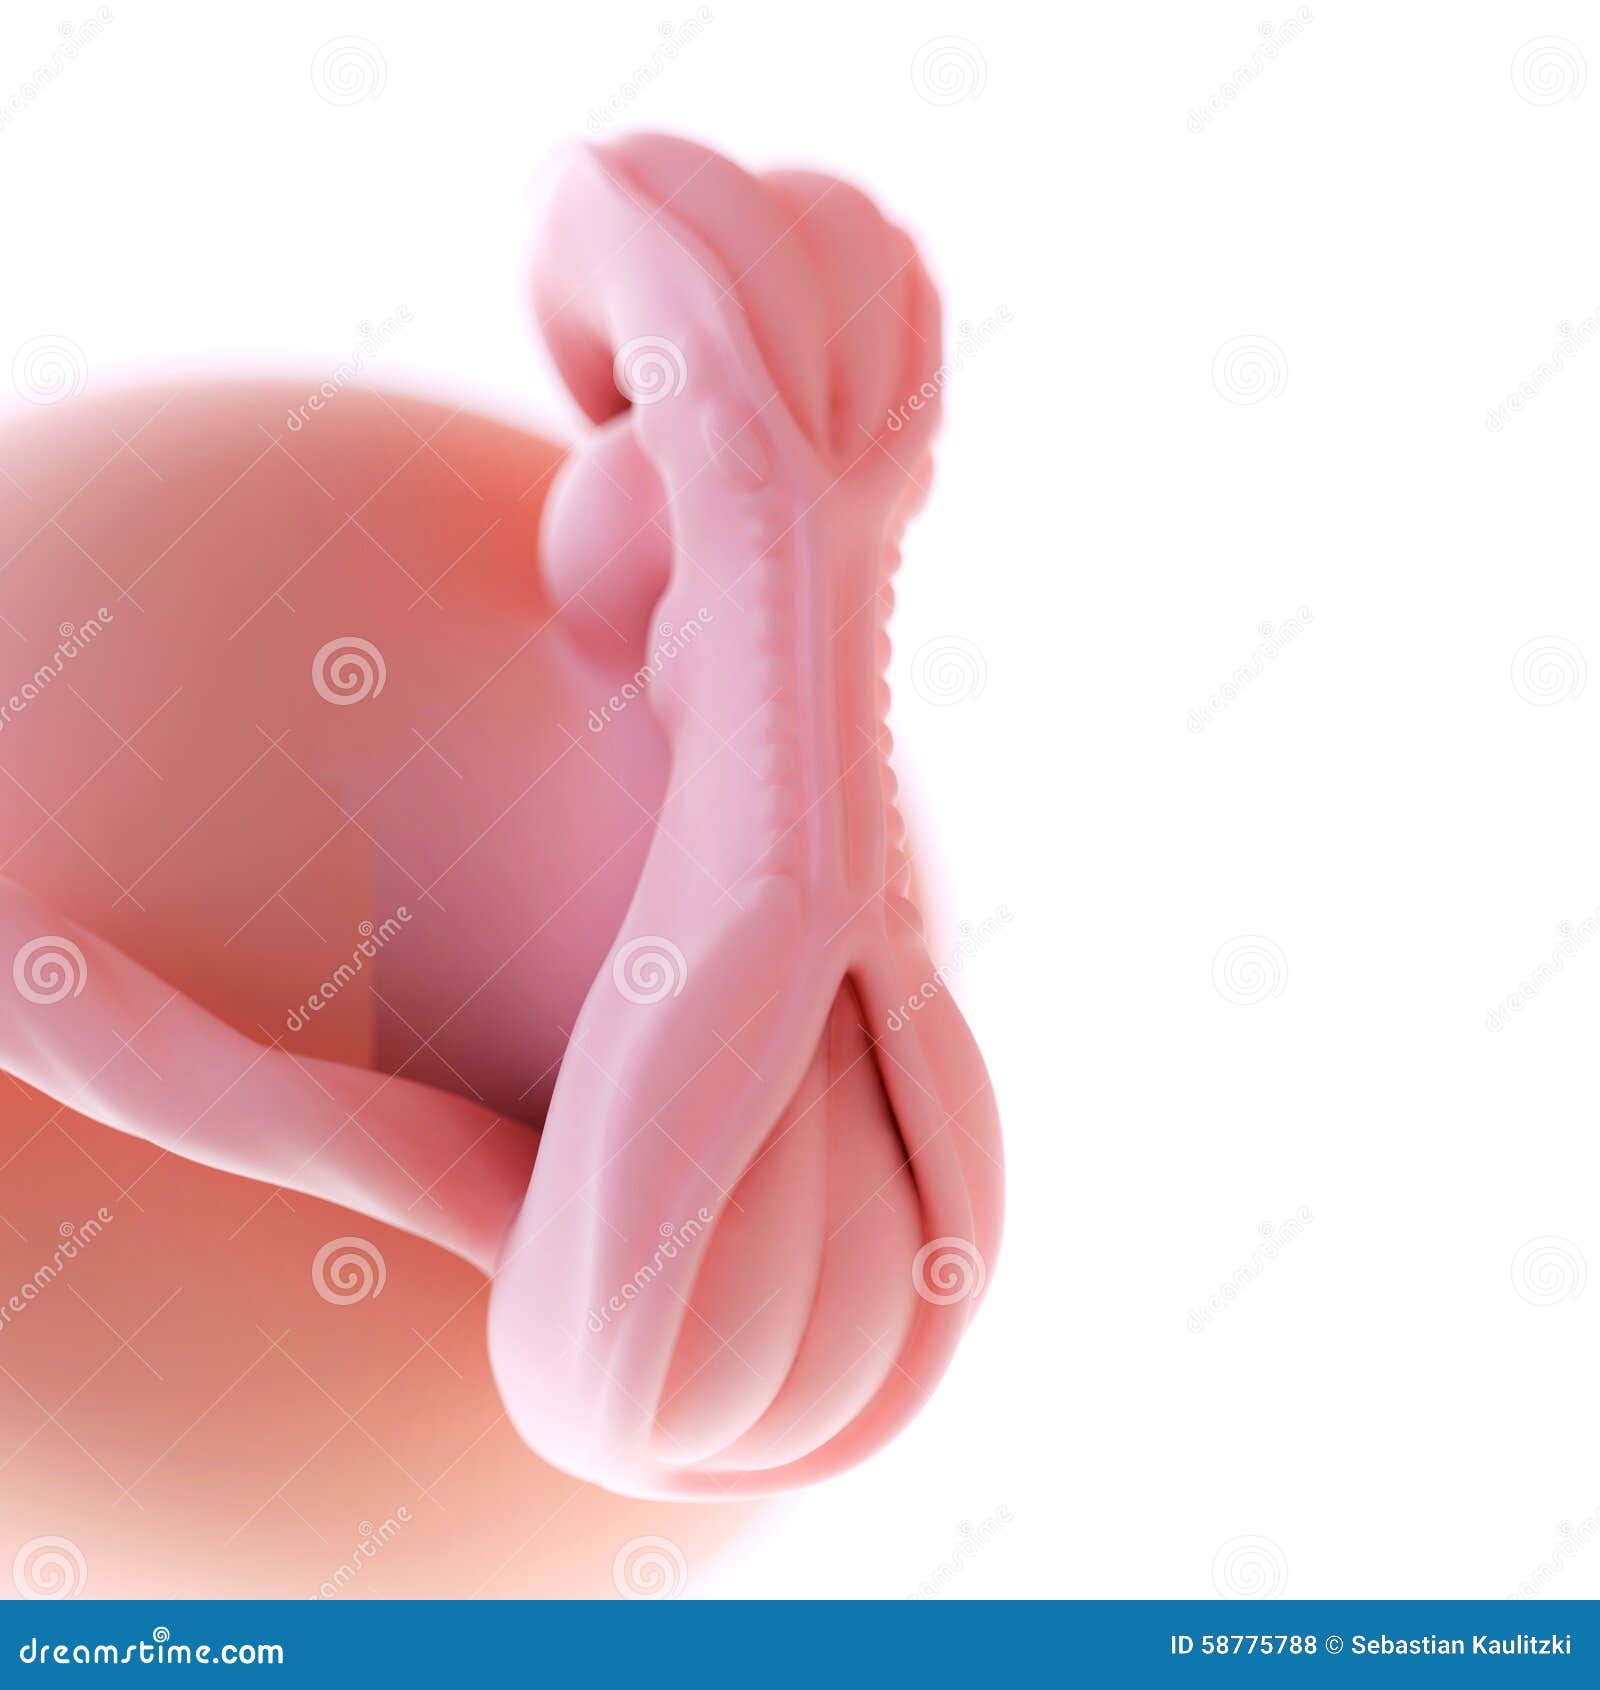 photo of 15 week fetus